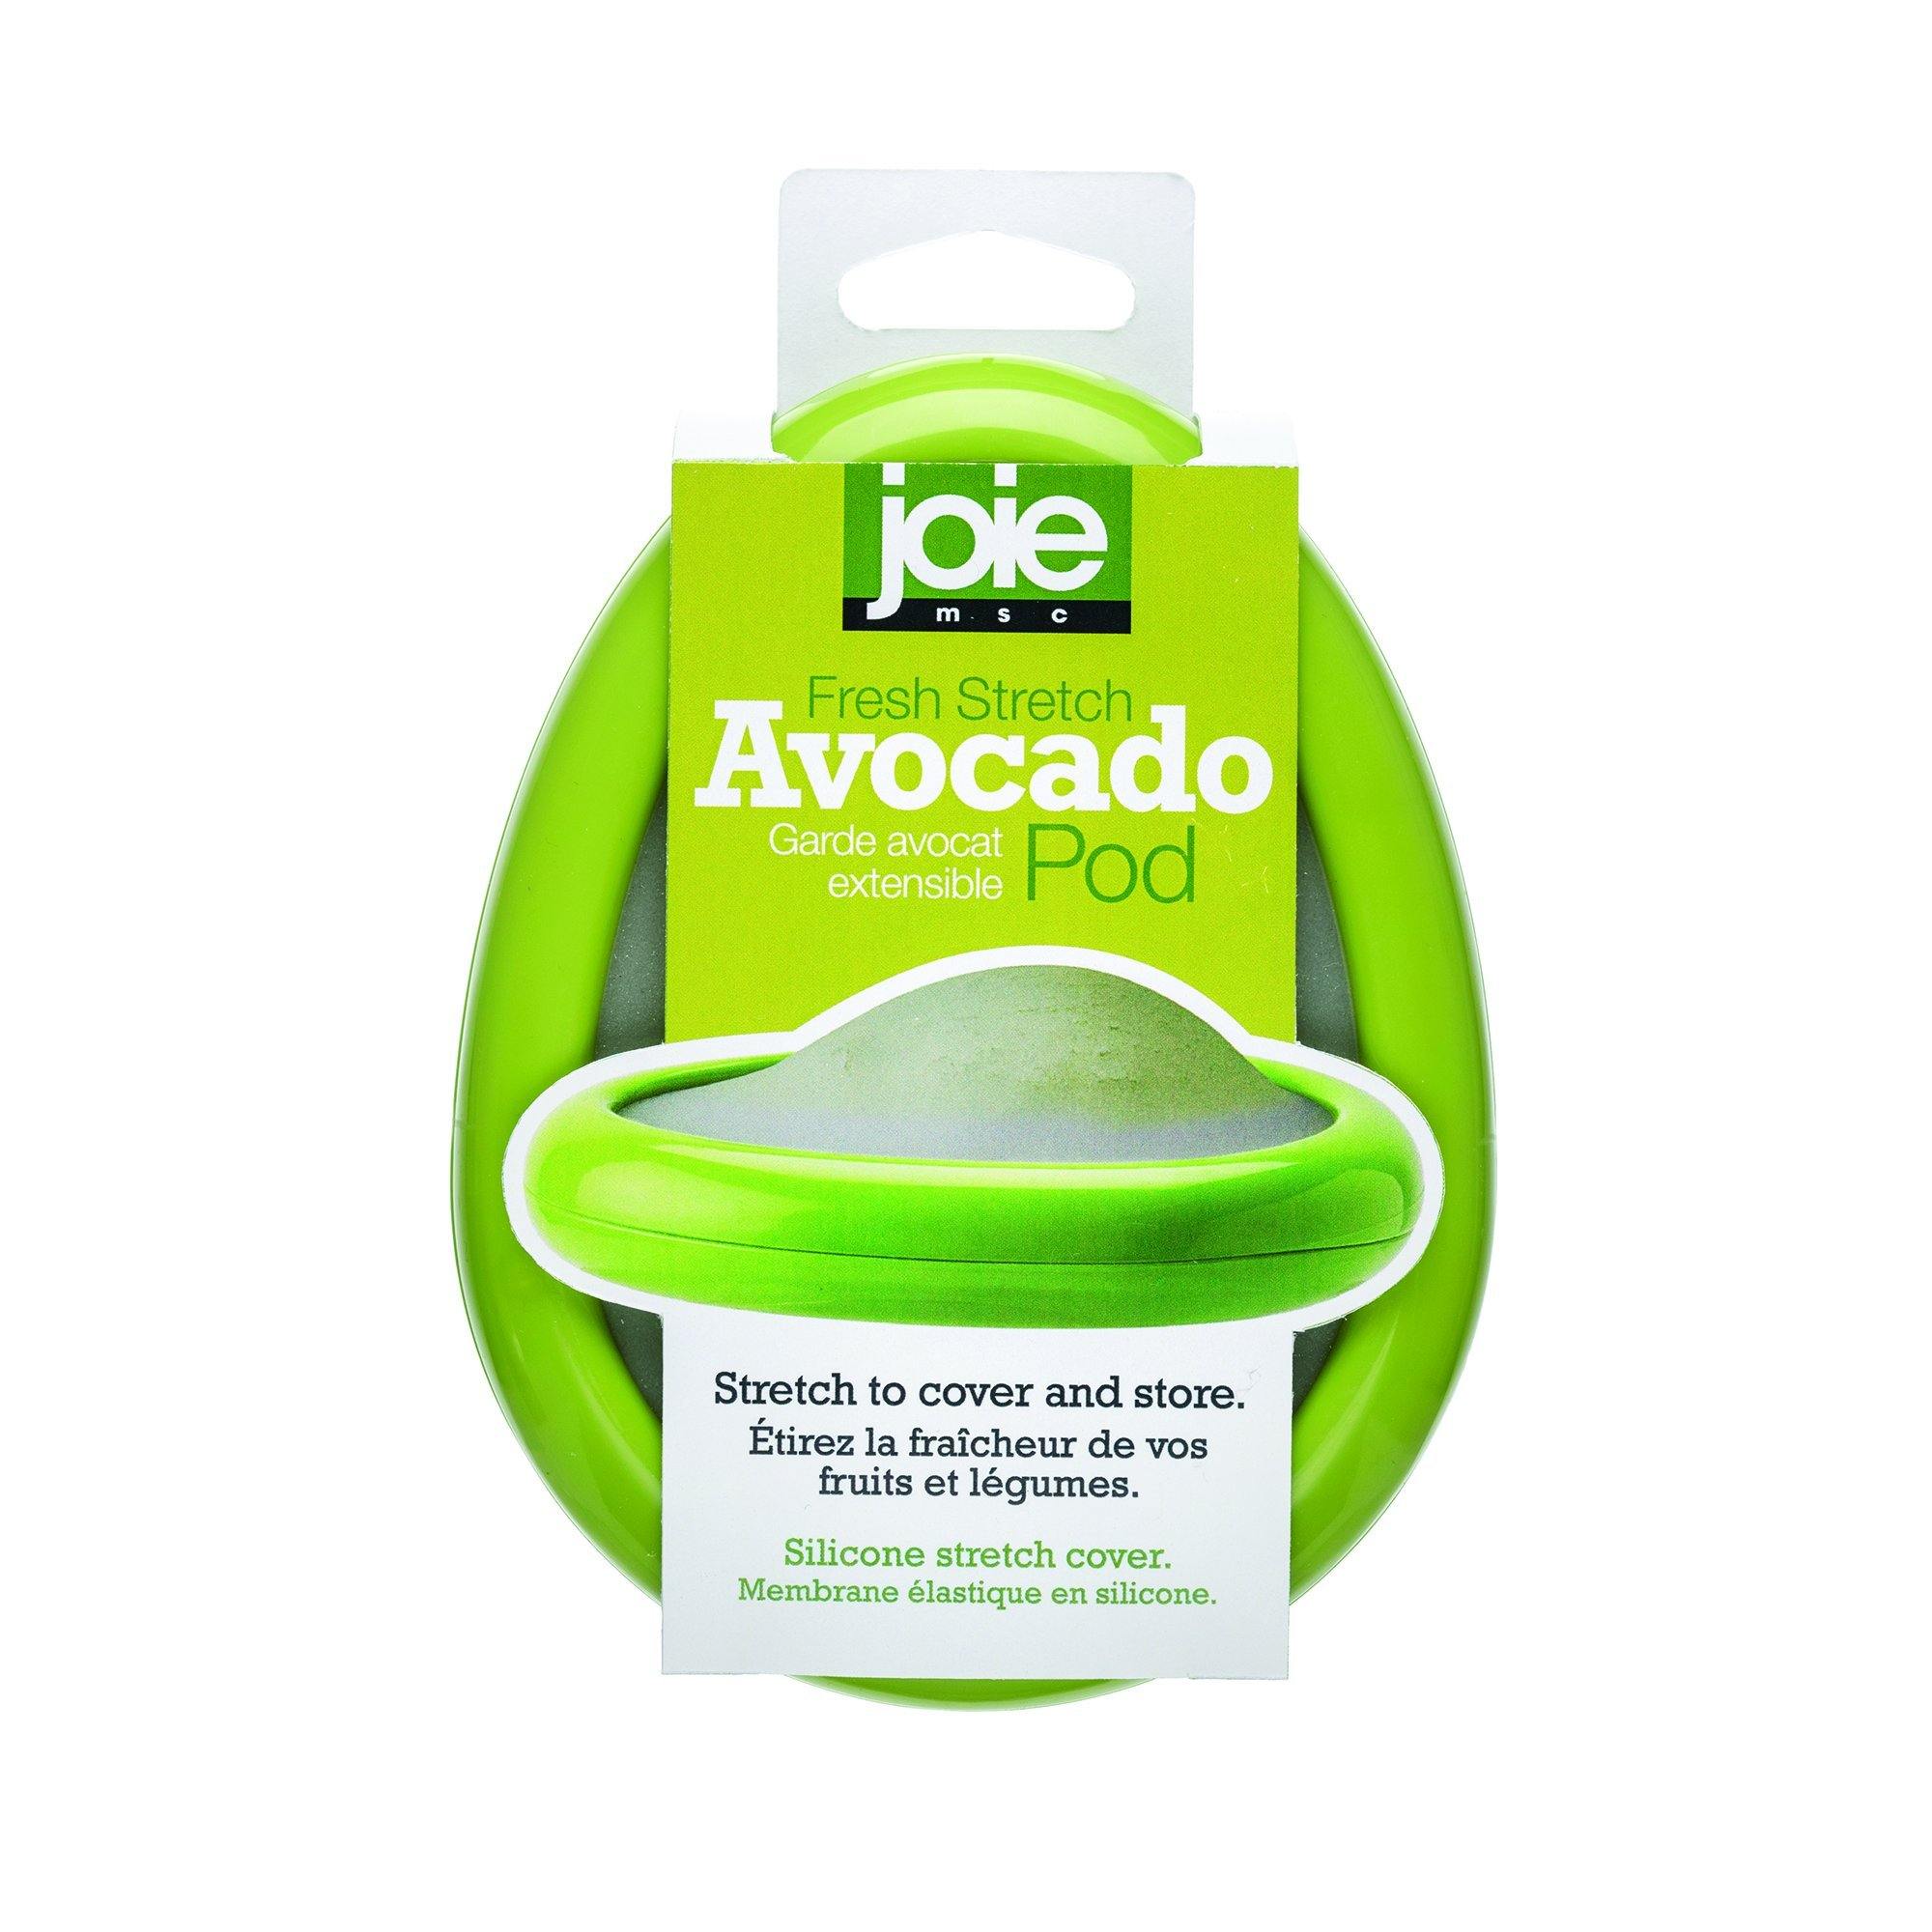 Joie MSC Avocado Stretch Pod - Dollar Max Depot